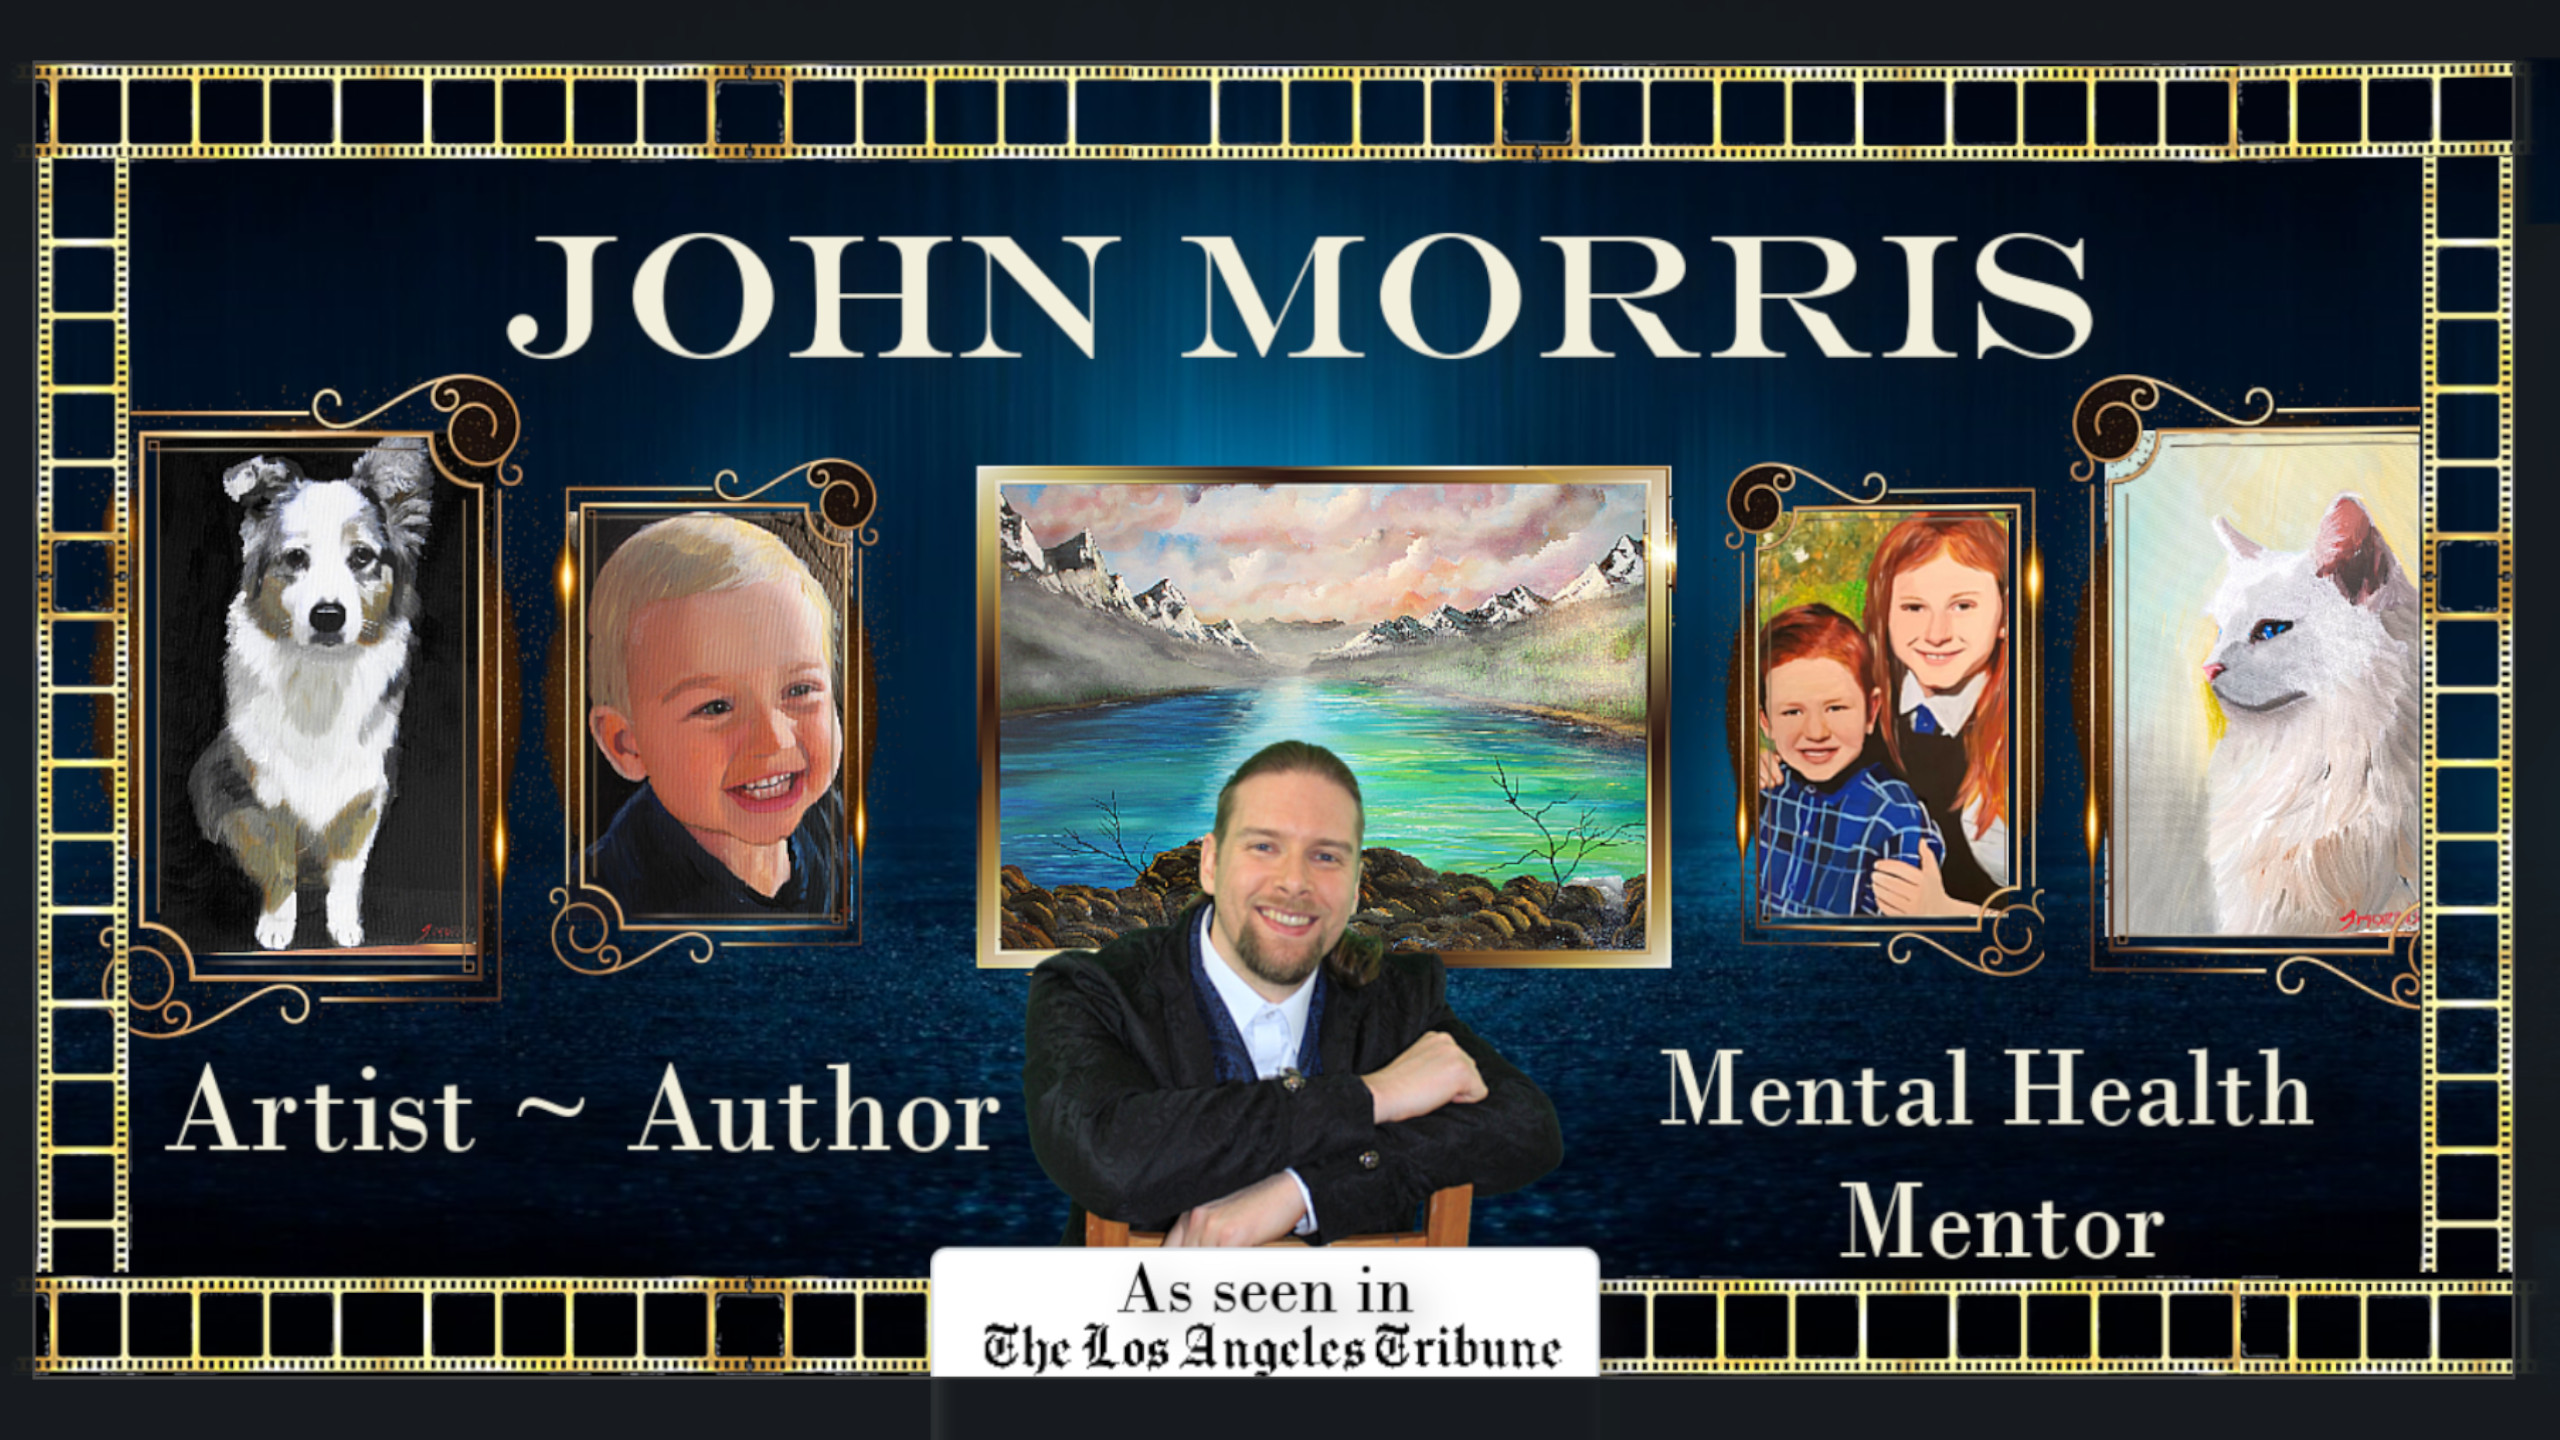 The John Morris